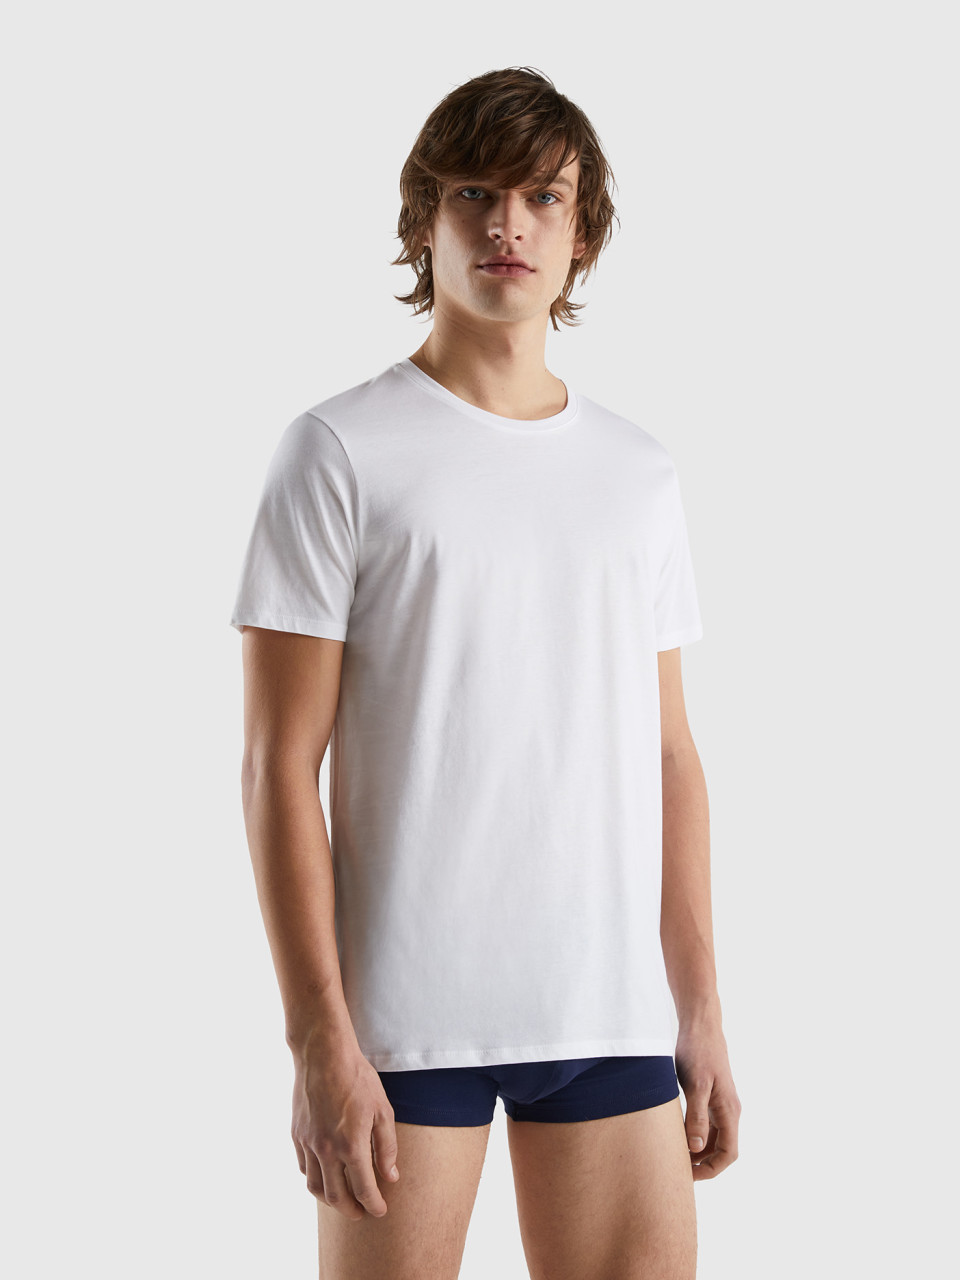 Benetton, Long Fiber Cotton T-shirt, White, Men